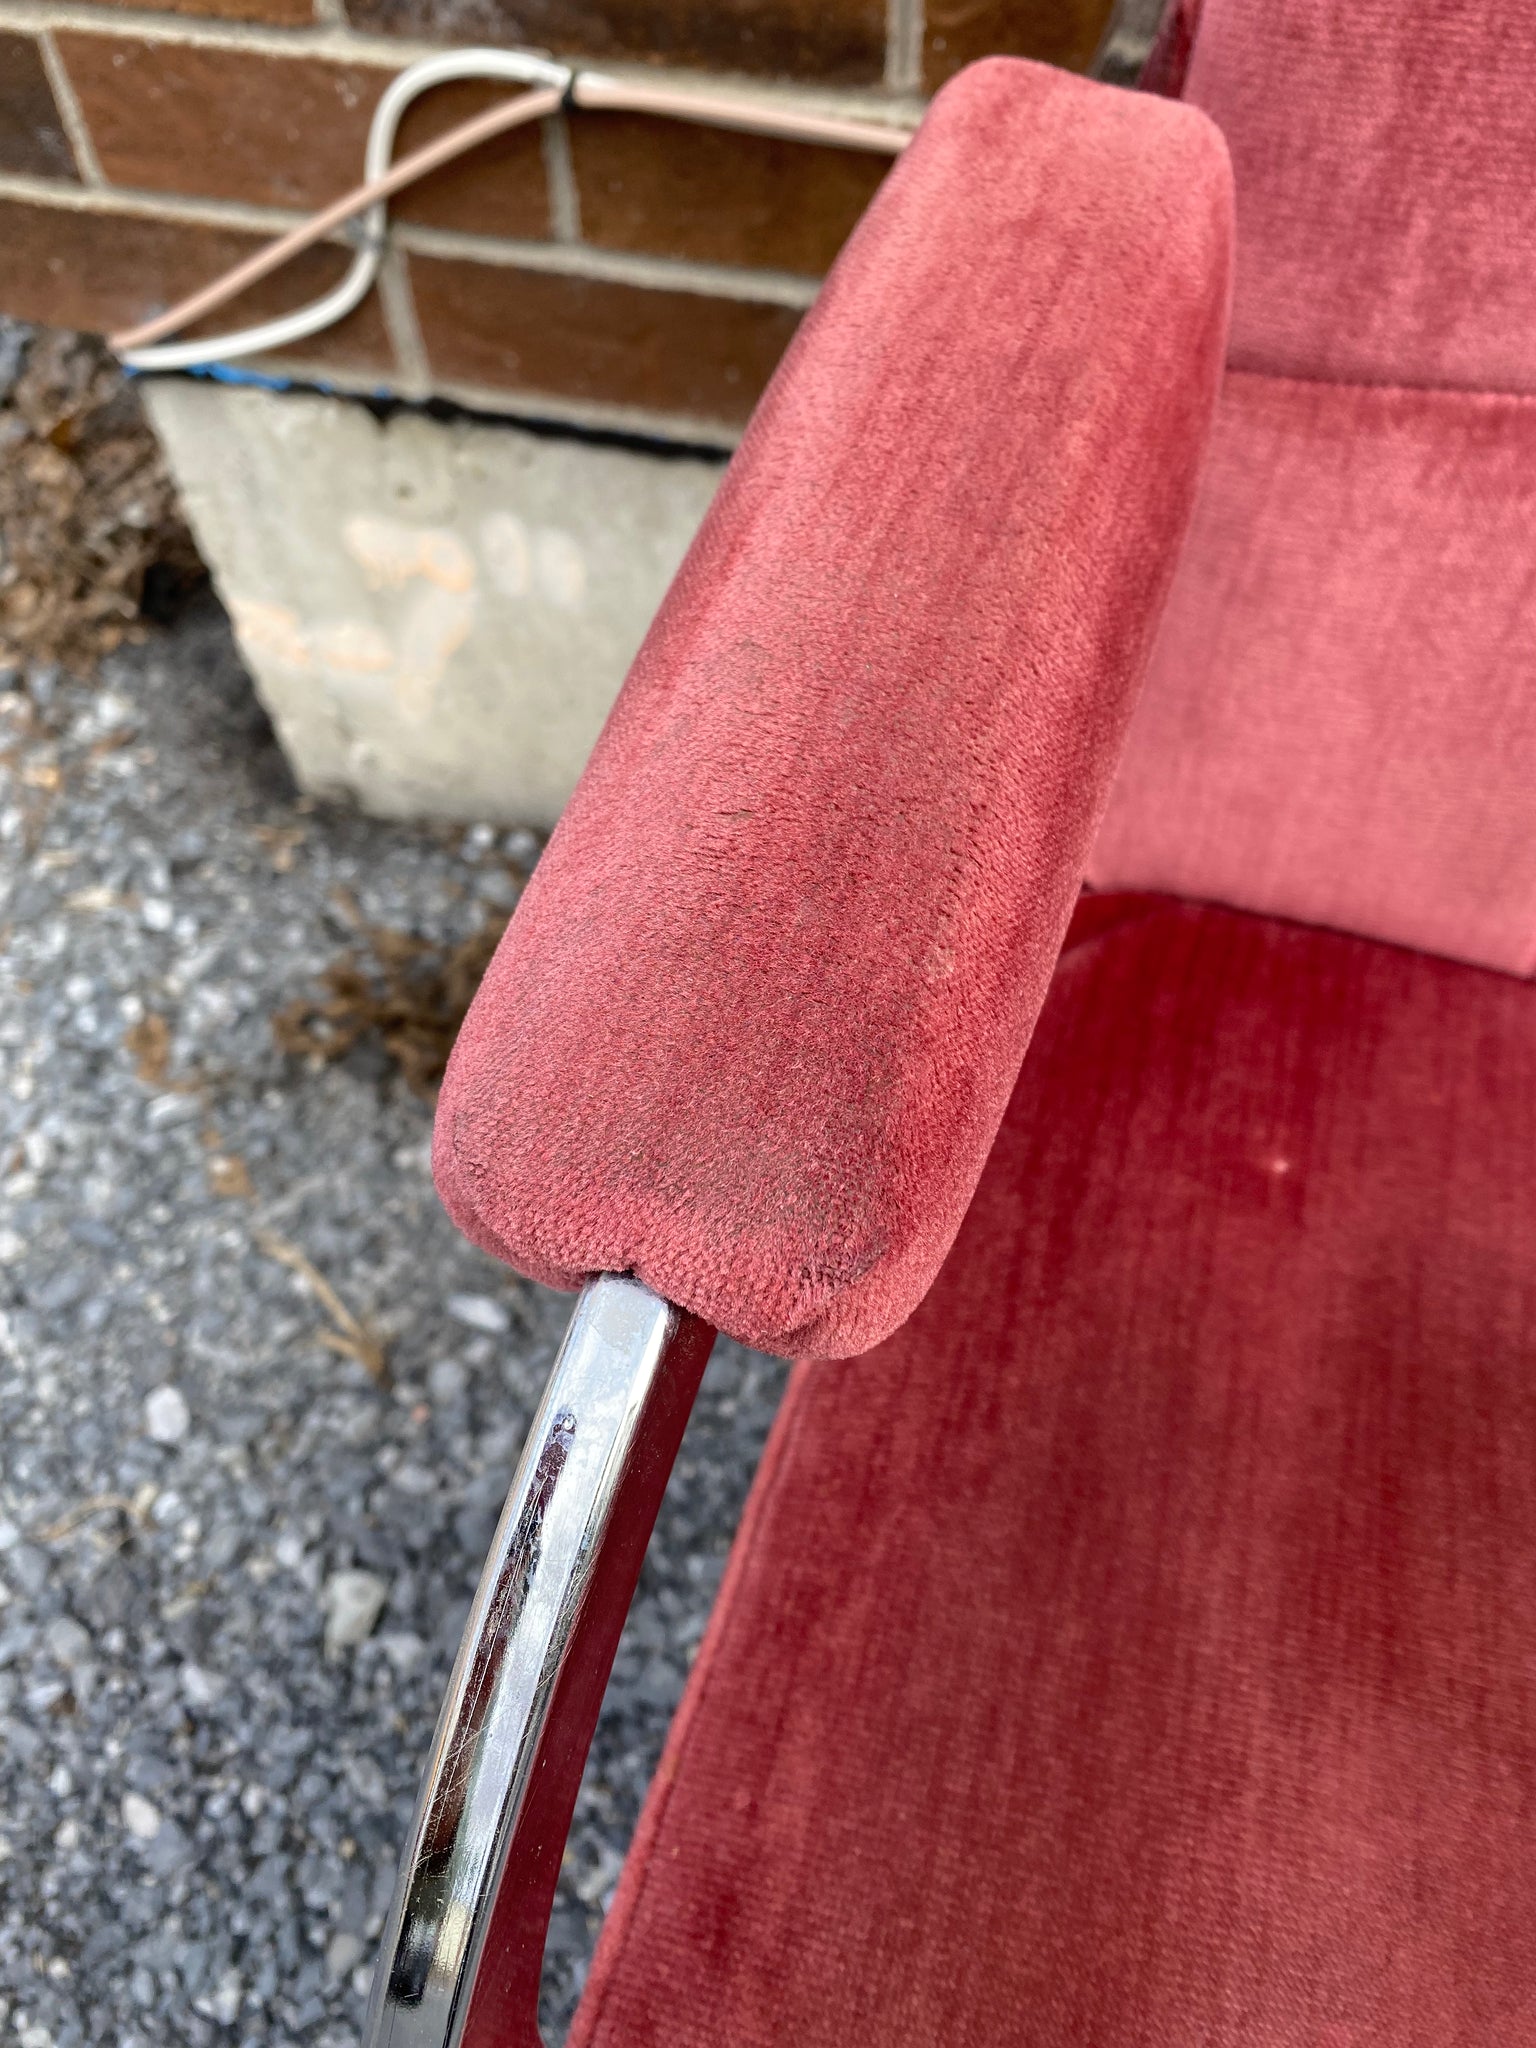 Strawberry velour & chrome chairs